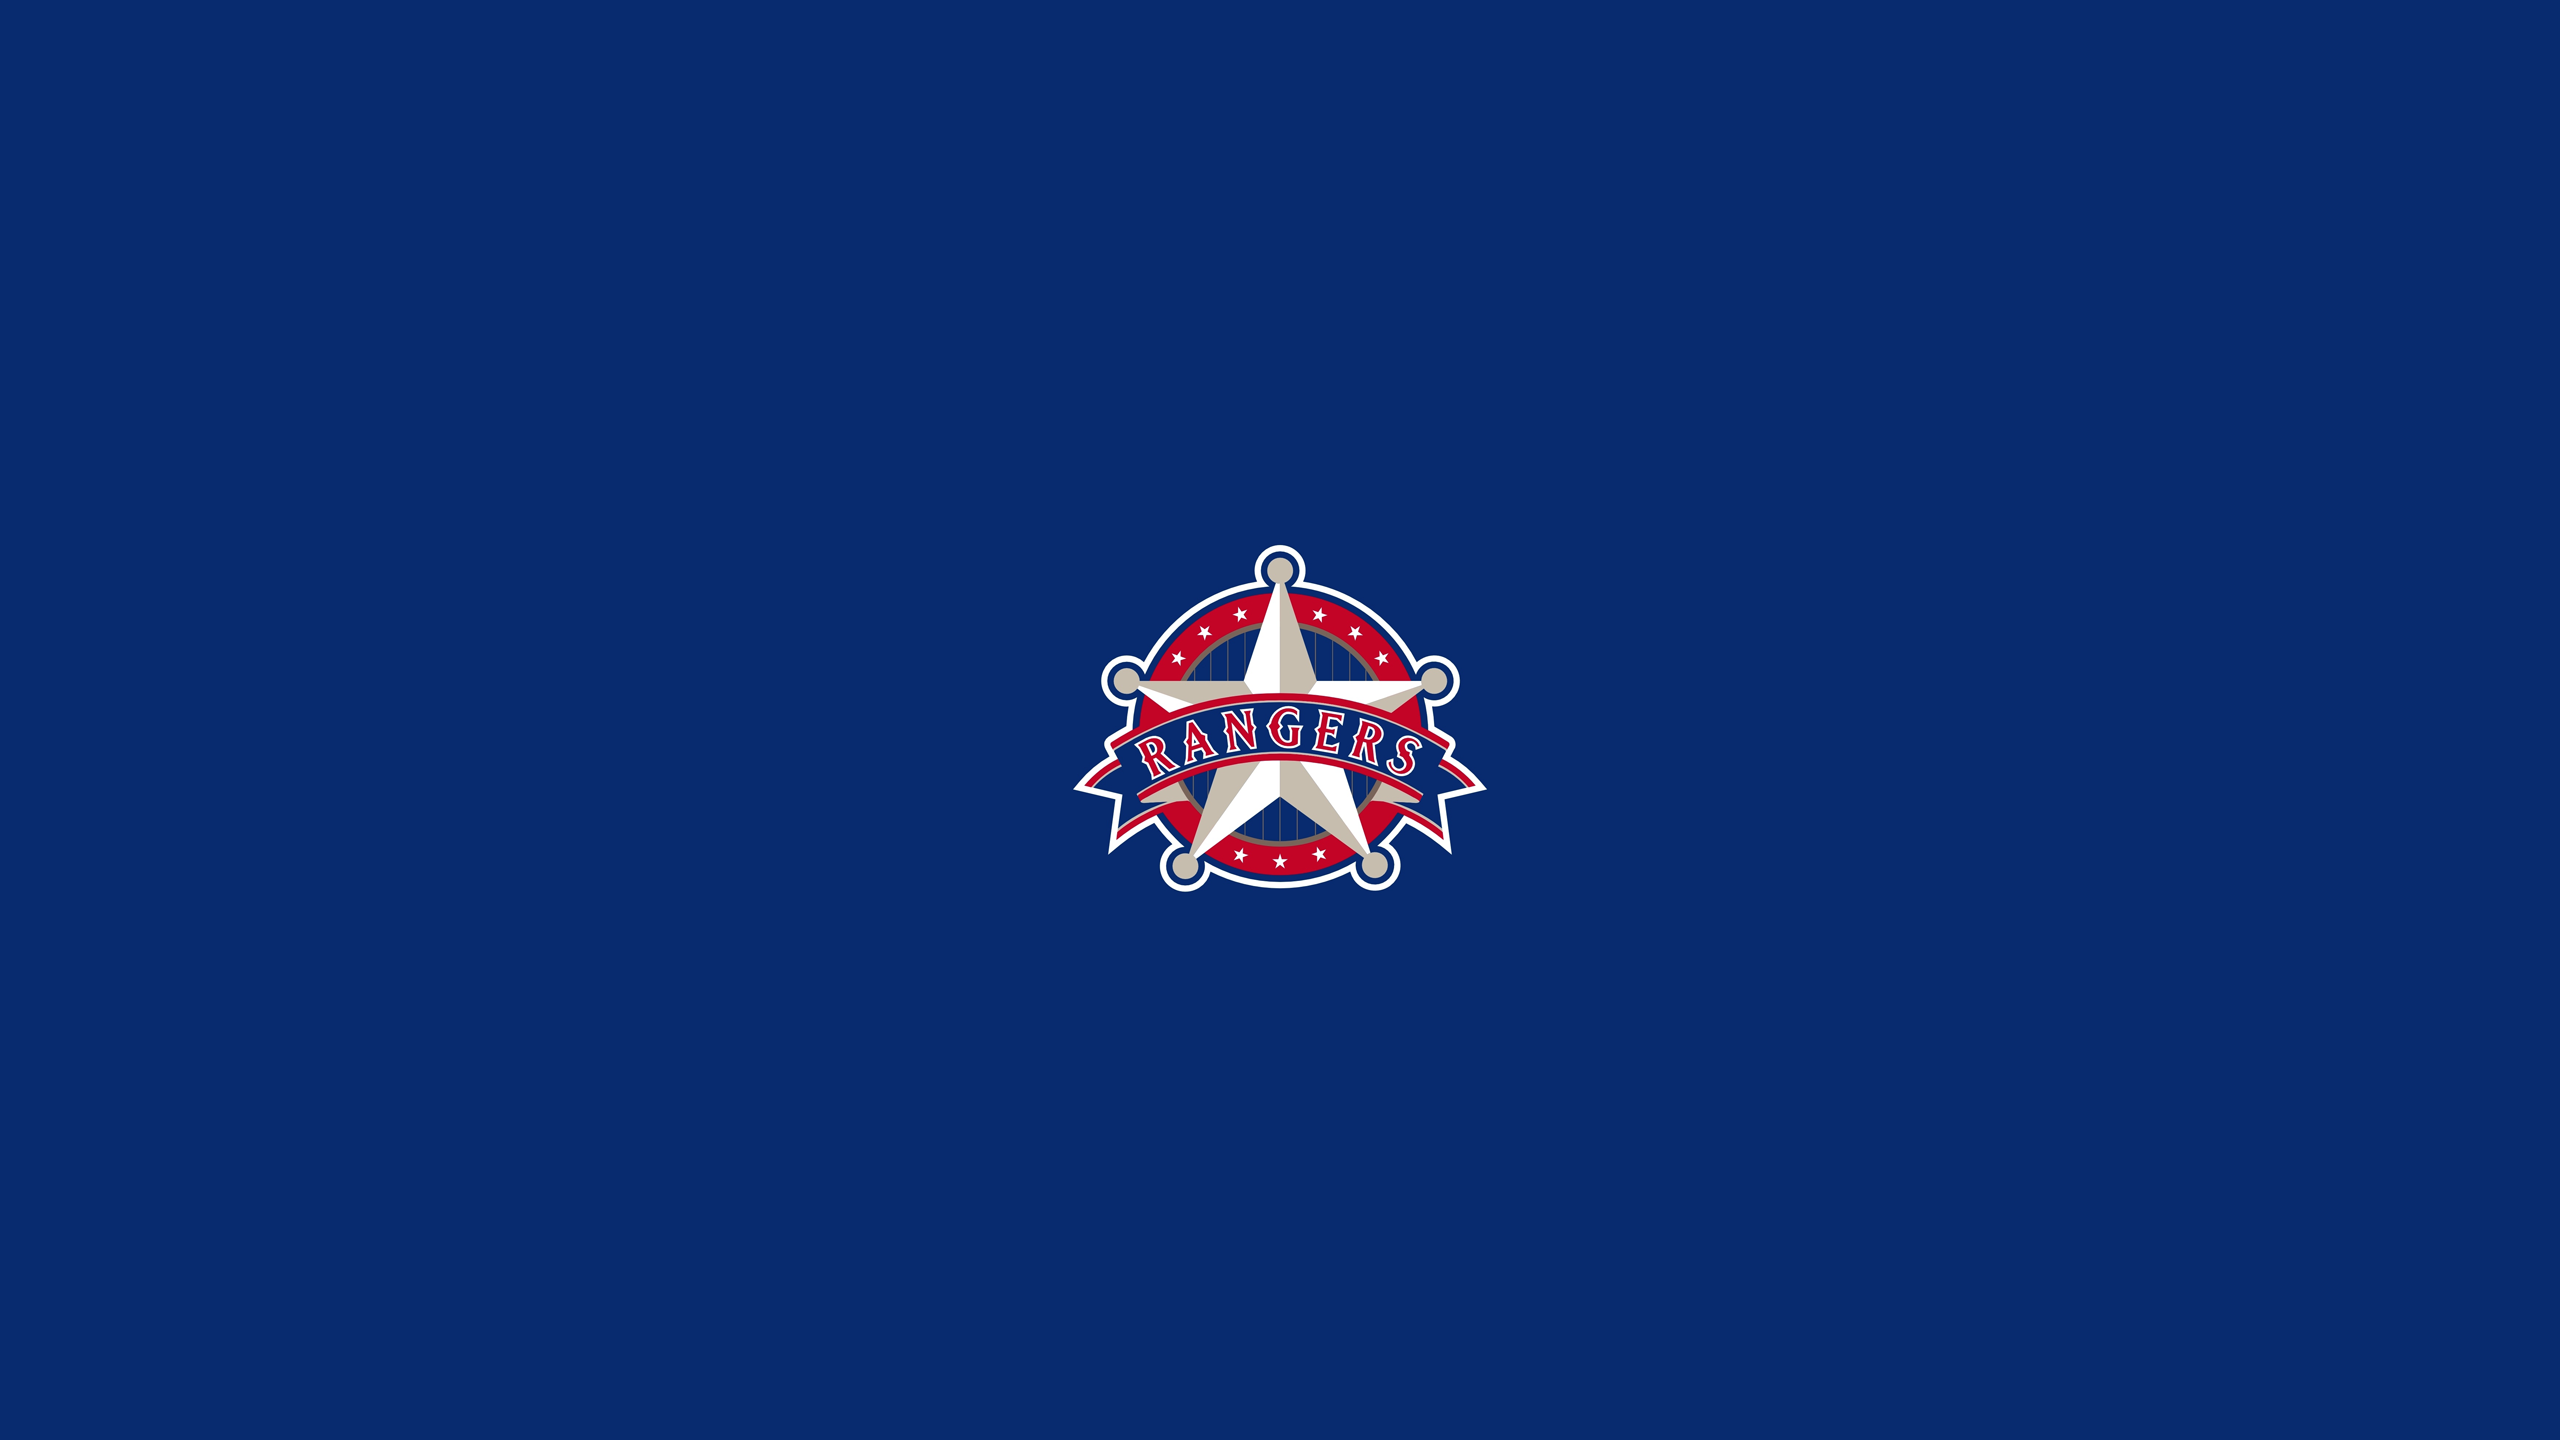 HD desktop wallpaper featuring the Texas Rangers logo on a blue background.